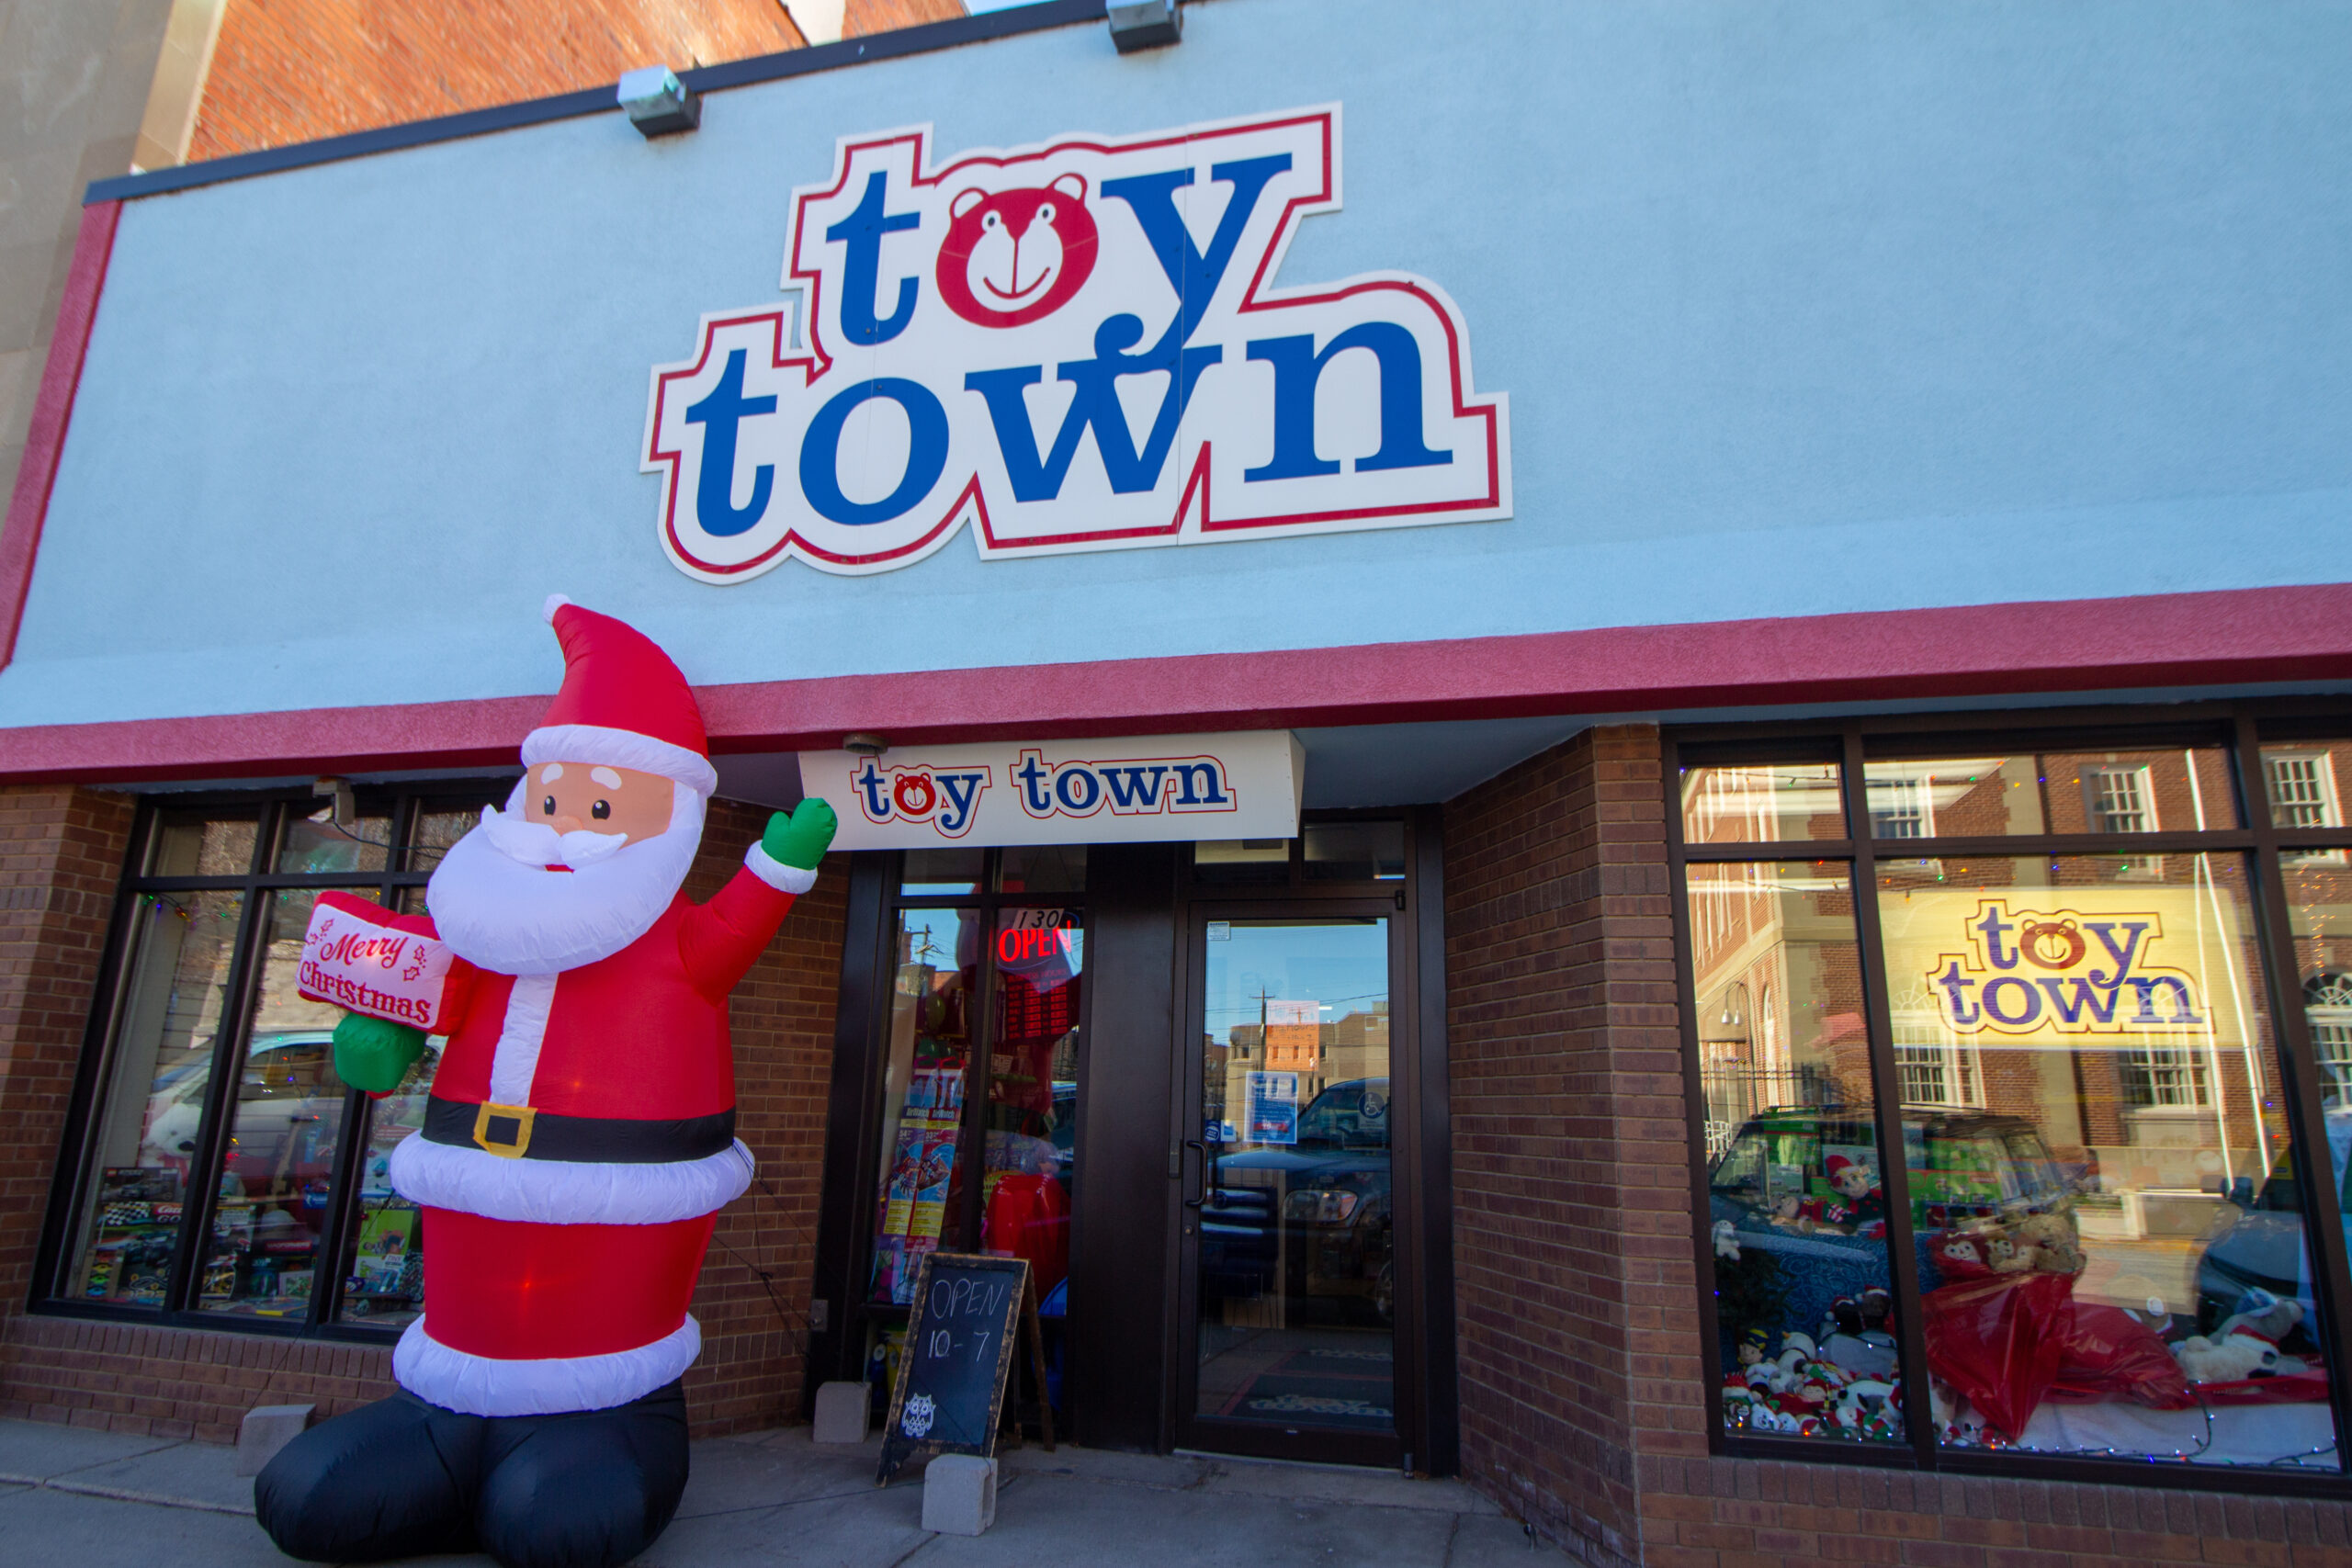 Toy Town in Casper, Wyoming.